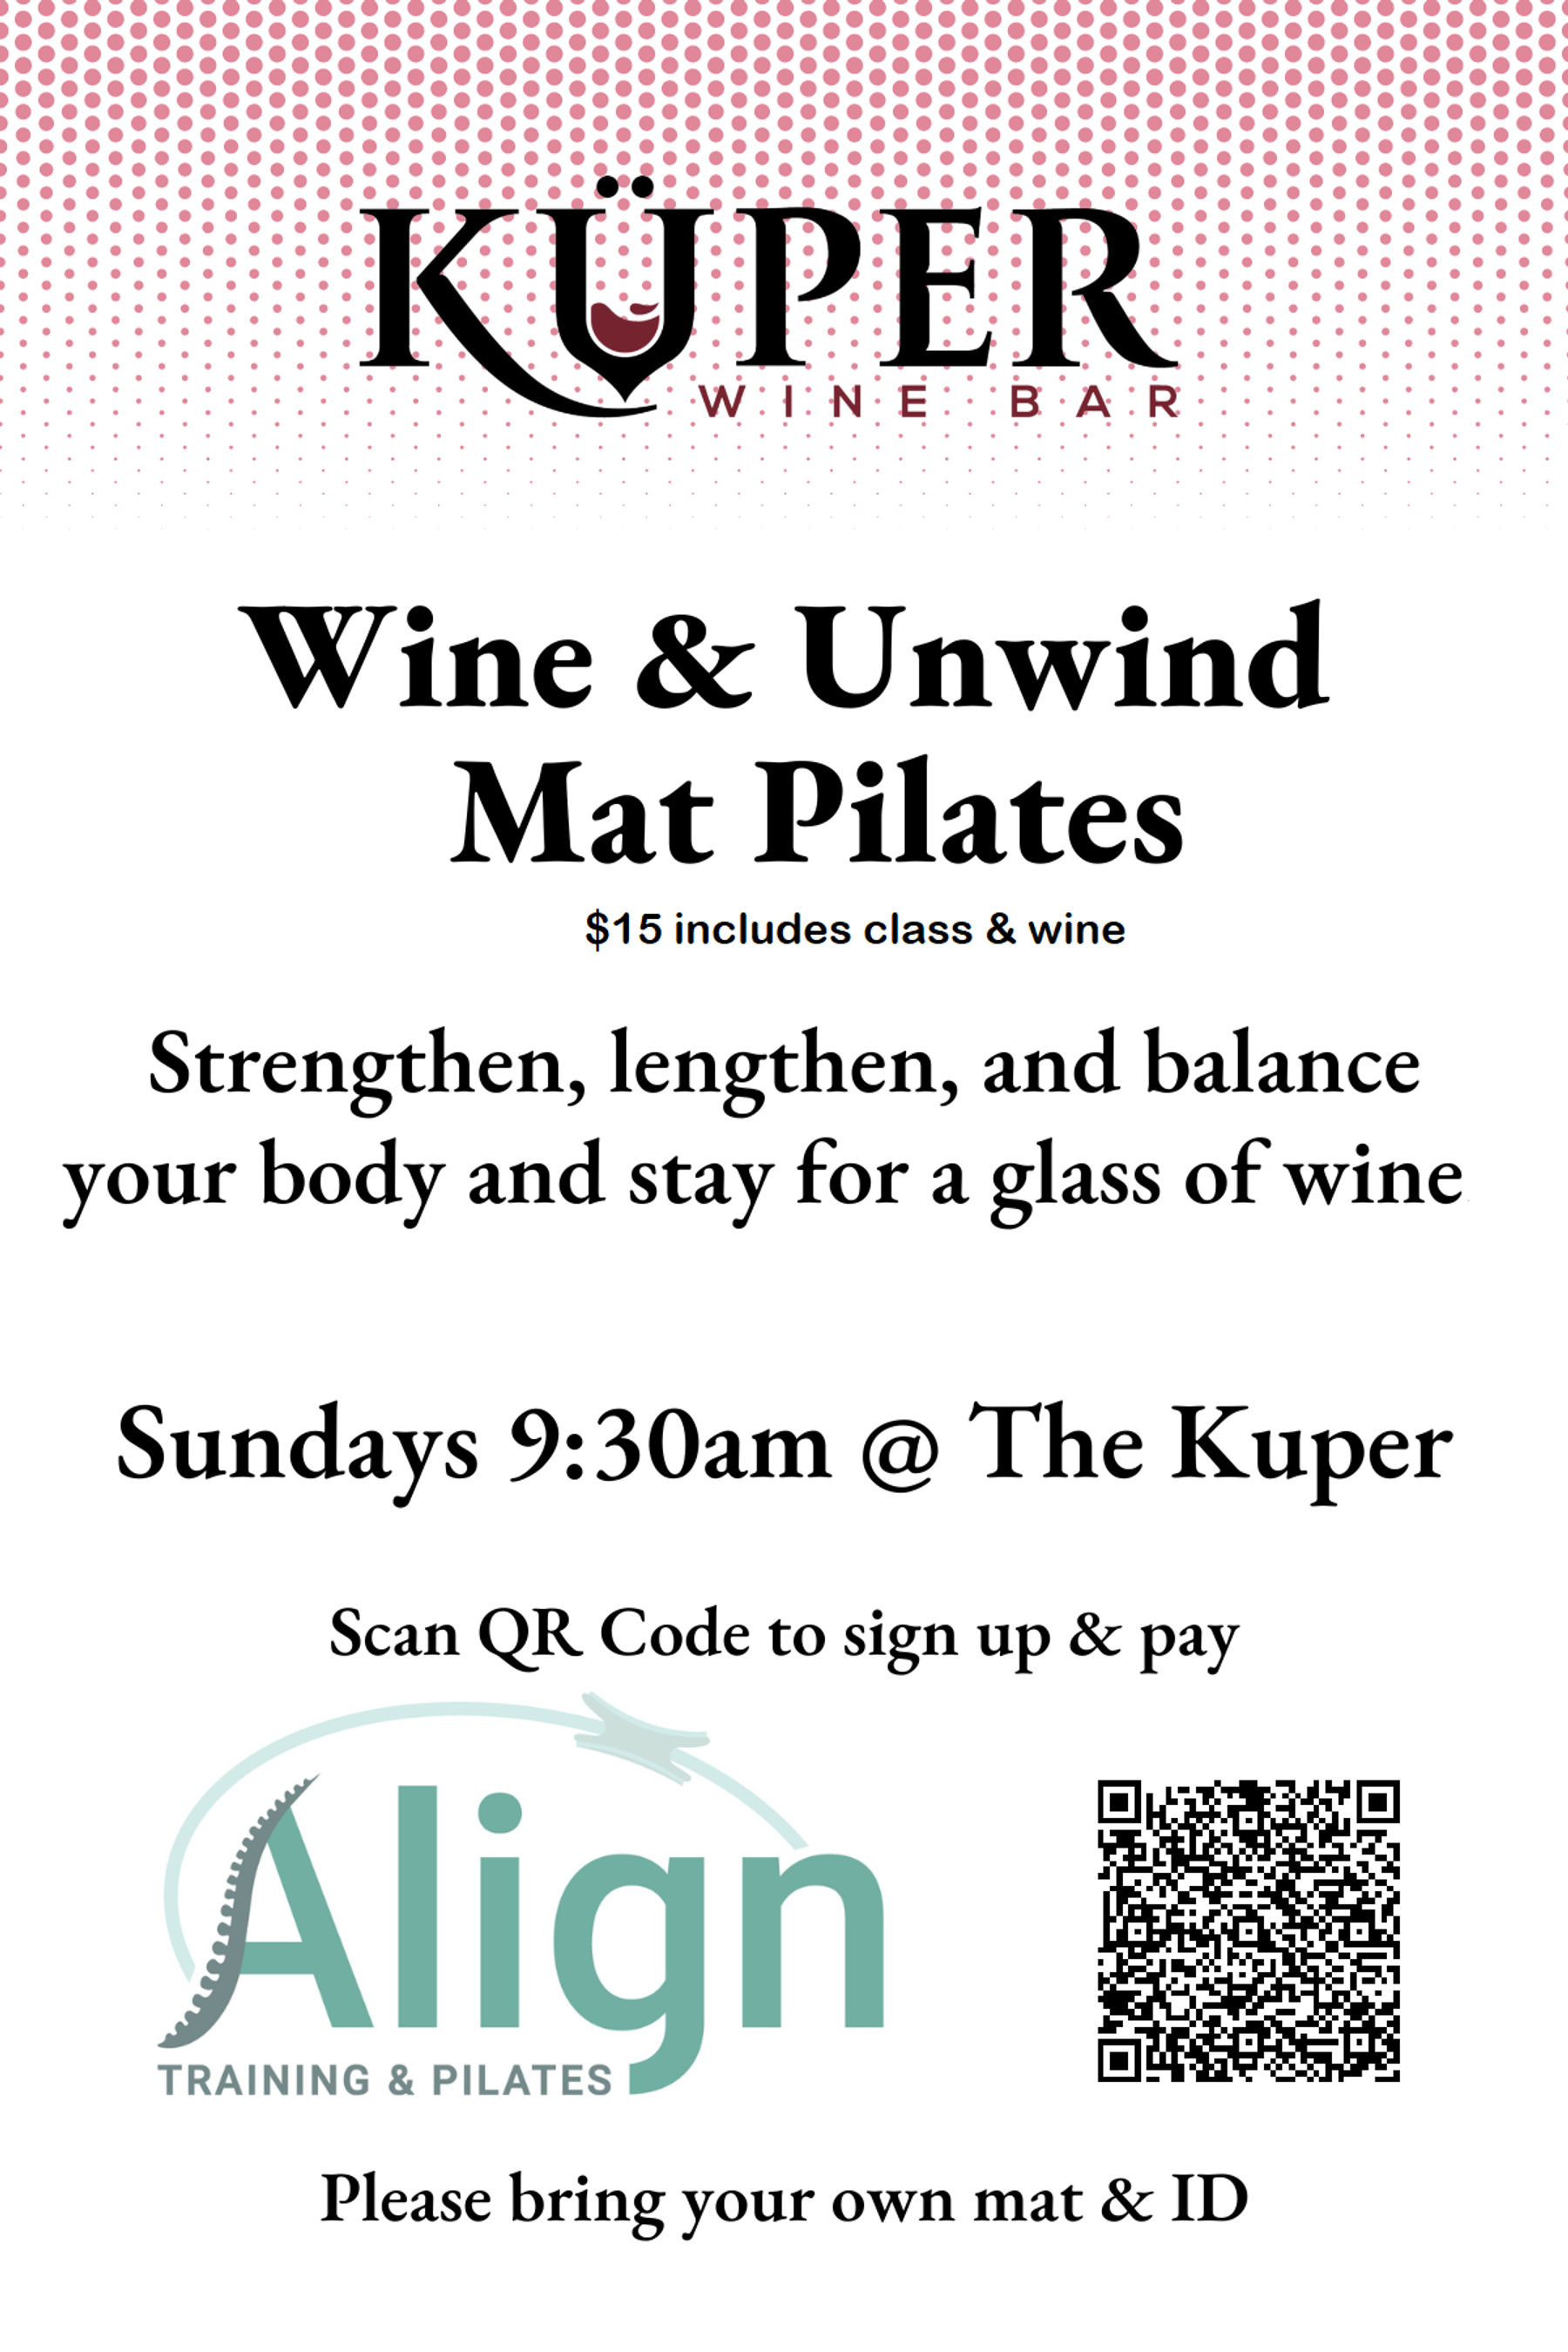 Wine & Unwind - Mat Pilates at The Kuper with Align Training & Pilates